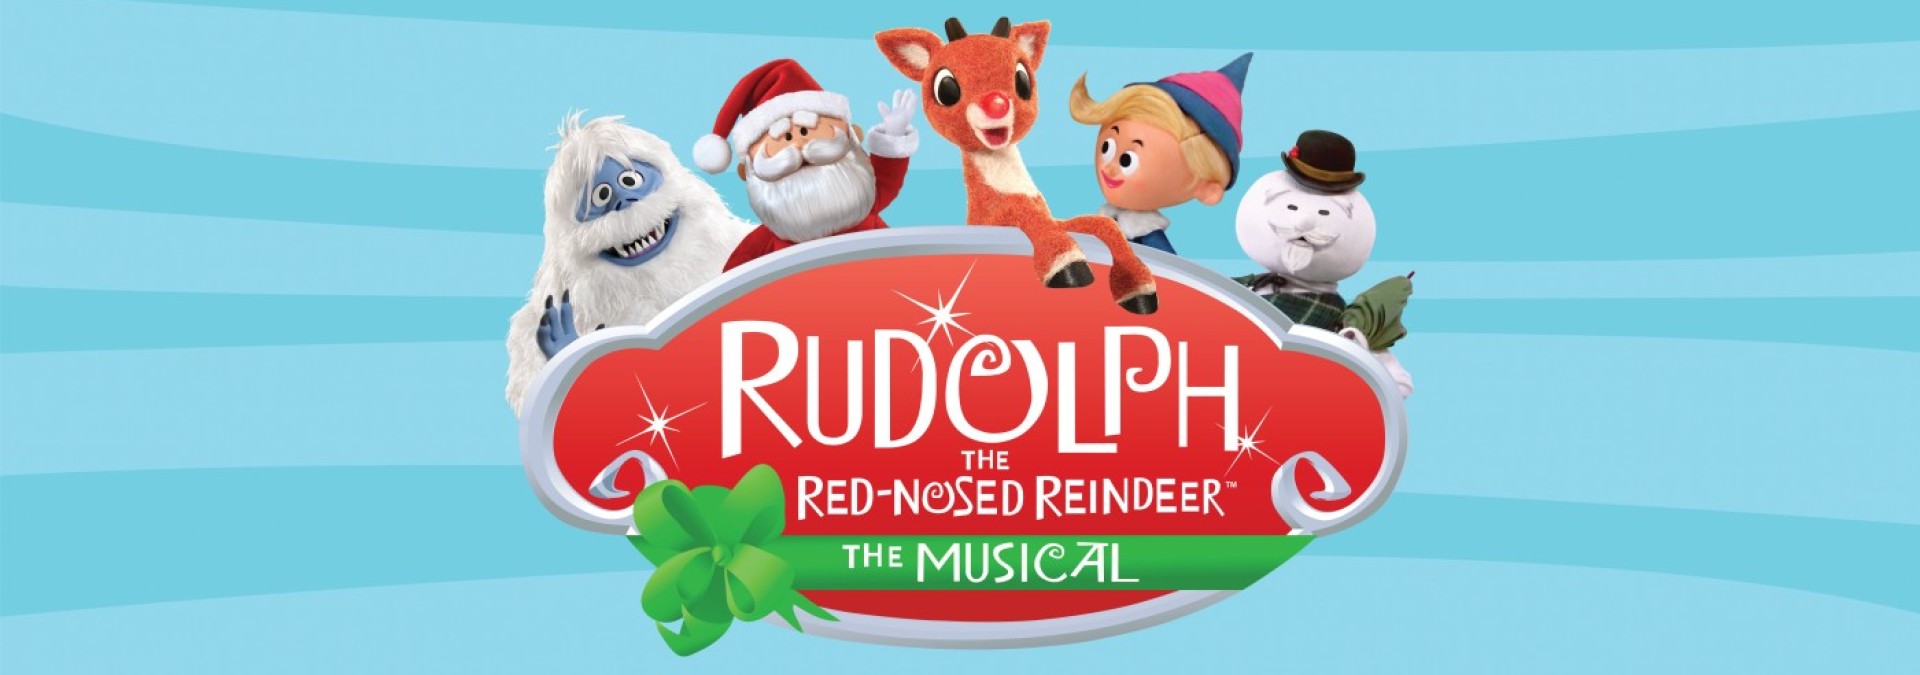 EventTicket Website Rudolph